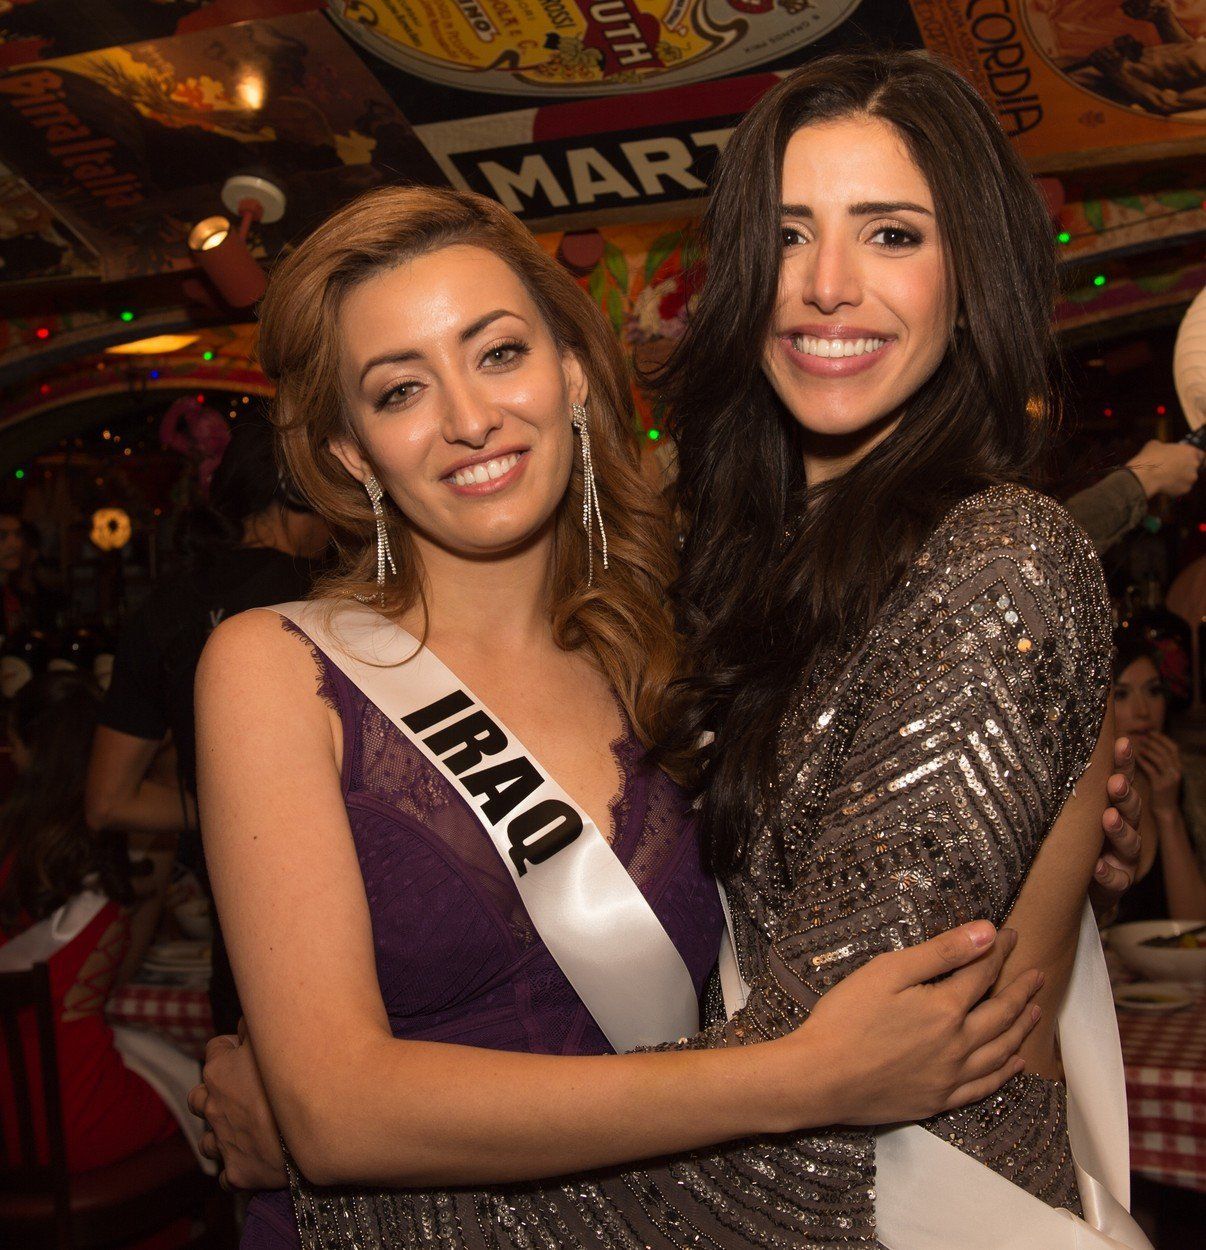 Miss Irák v Las Vegas